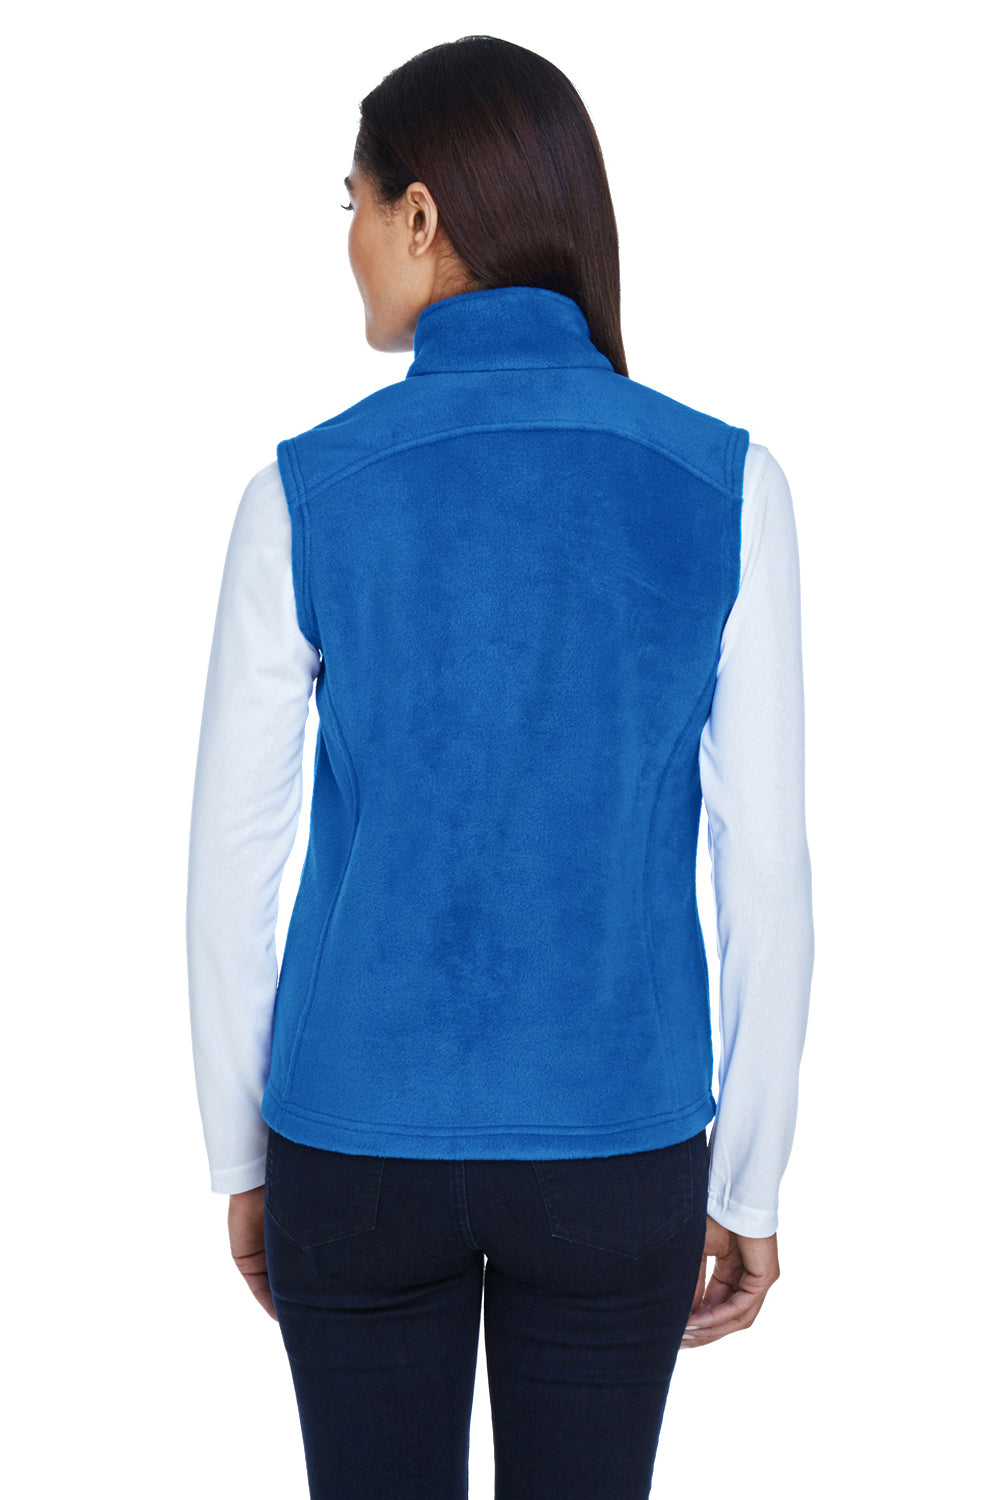 Core 365 78191 Womens Journey Full Zip Fleece Vest Royal Blue Back